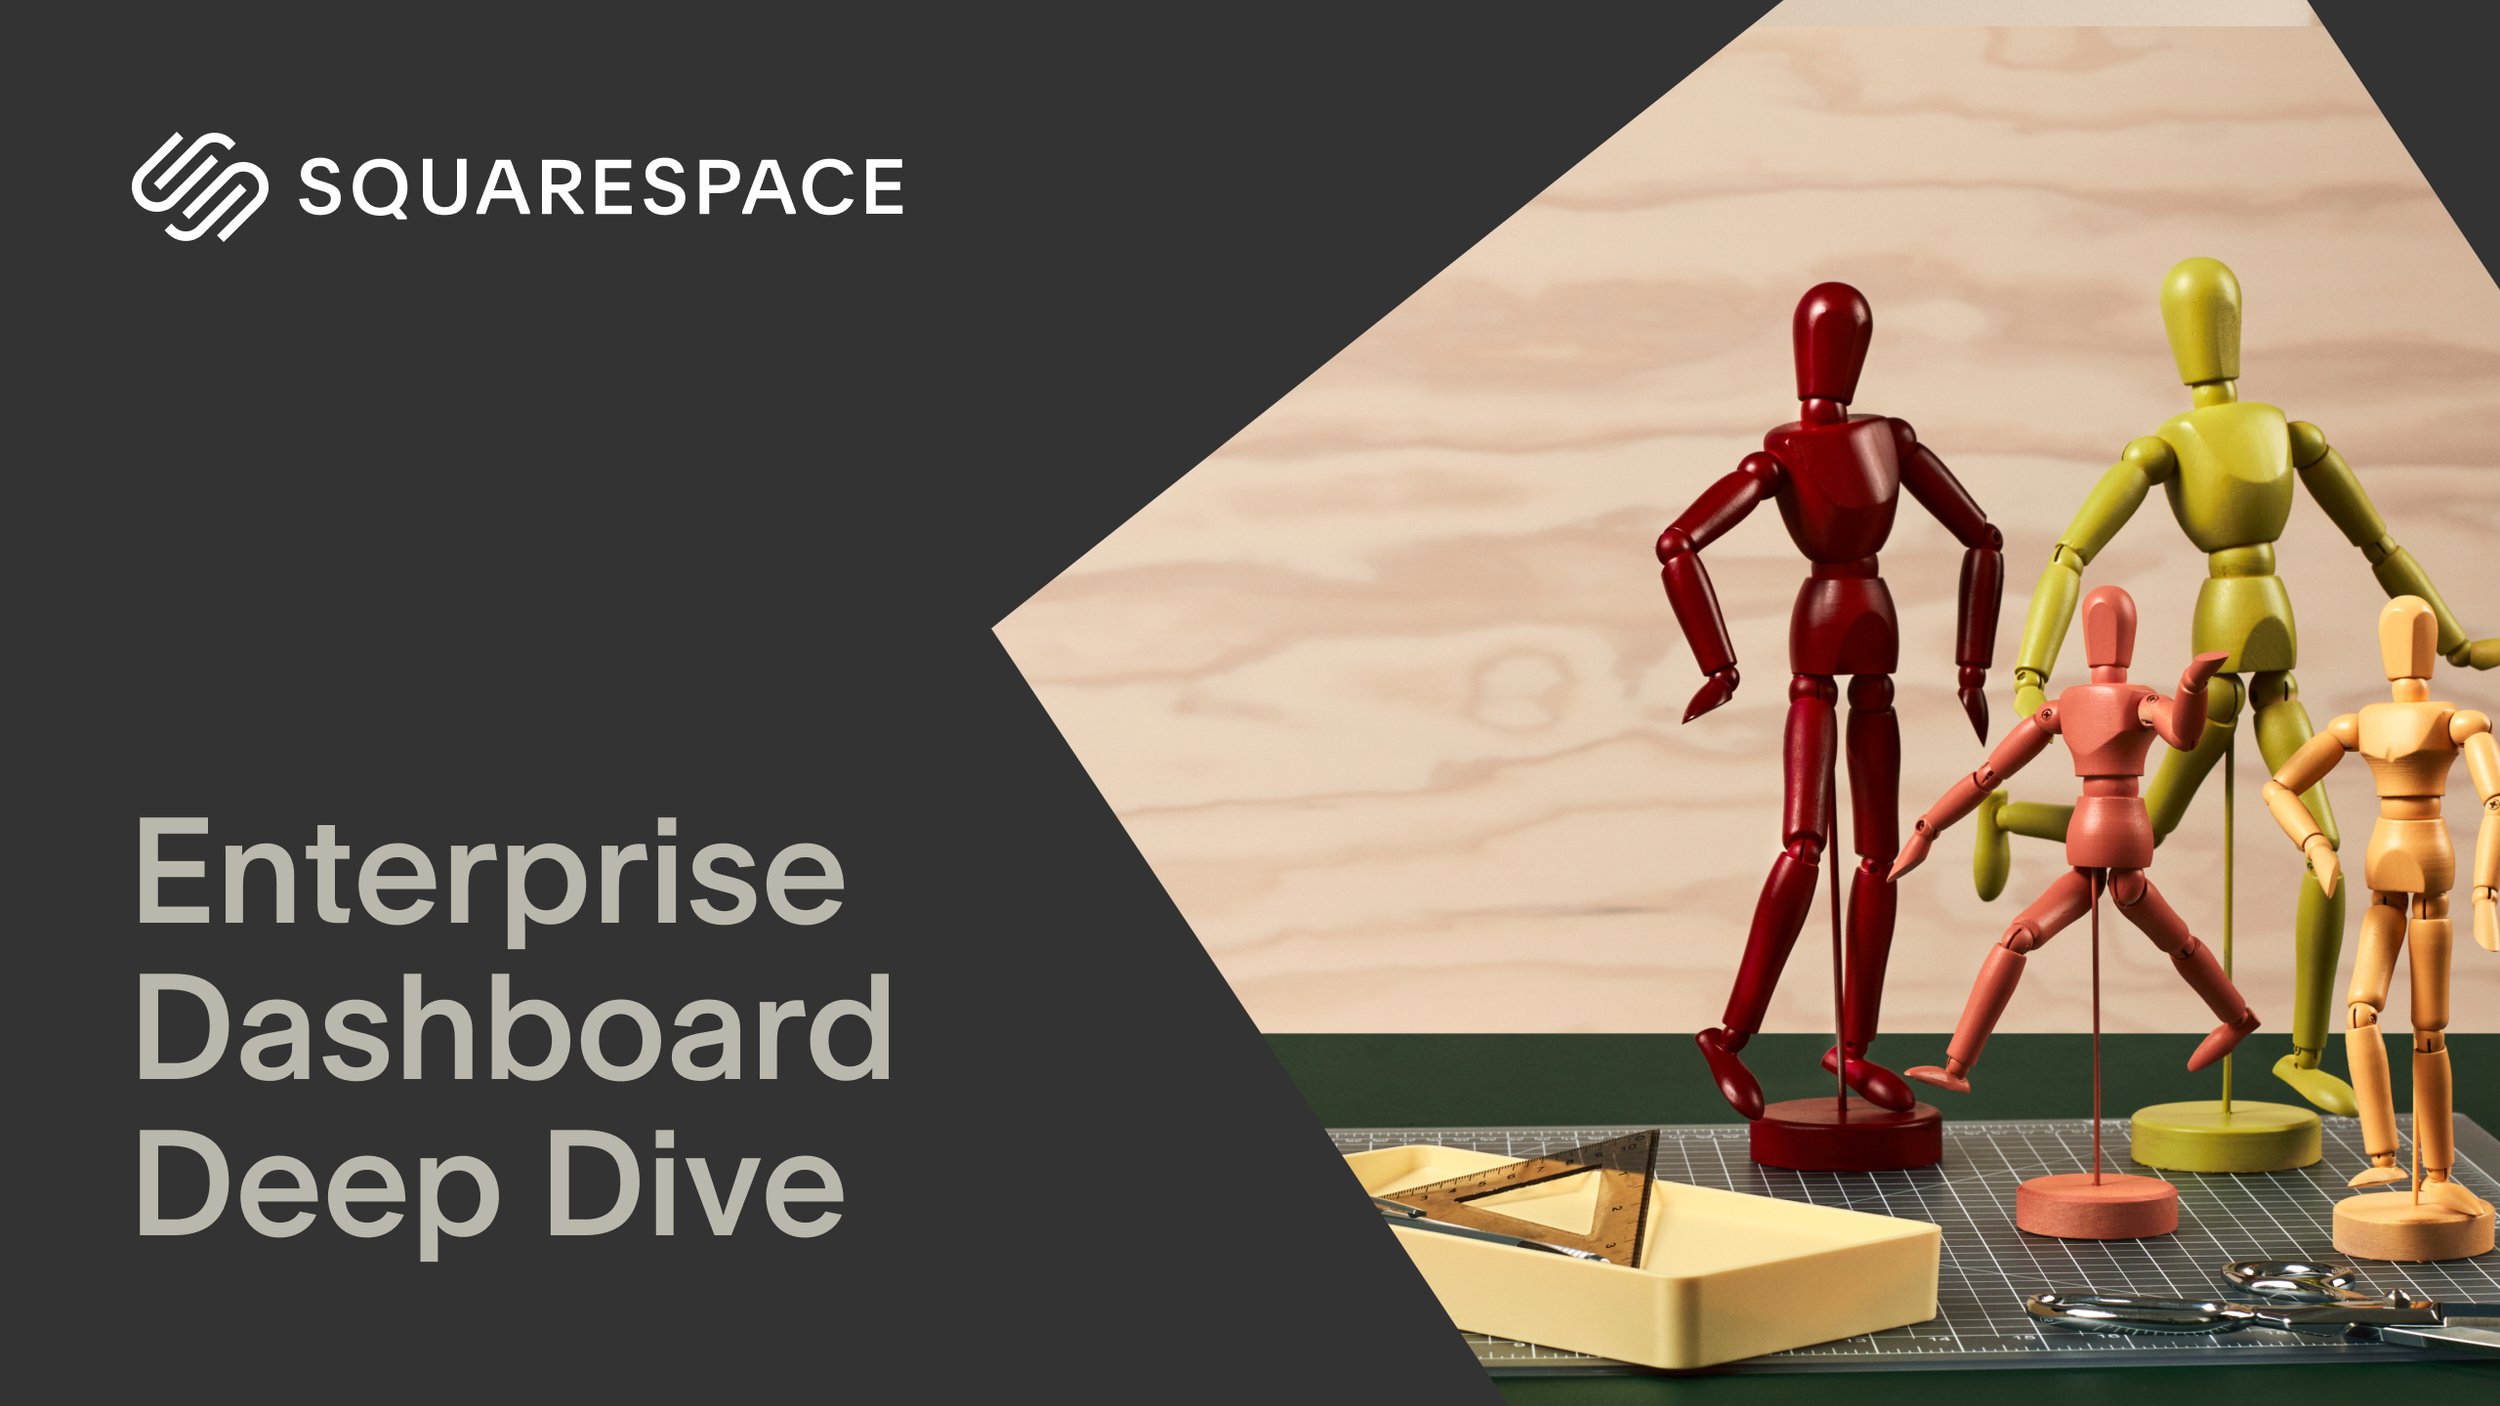 Video: Exploring the Squarespace Enterprise Dashboard